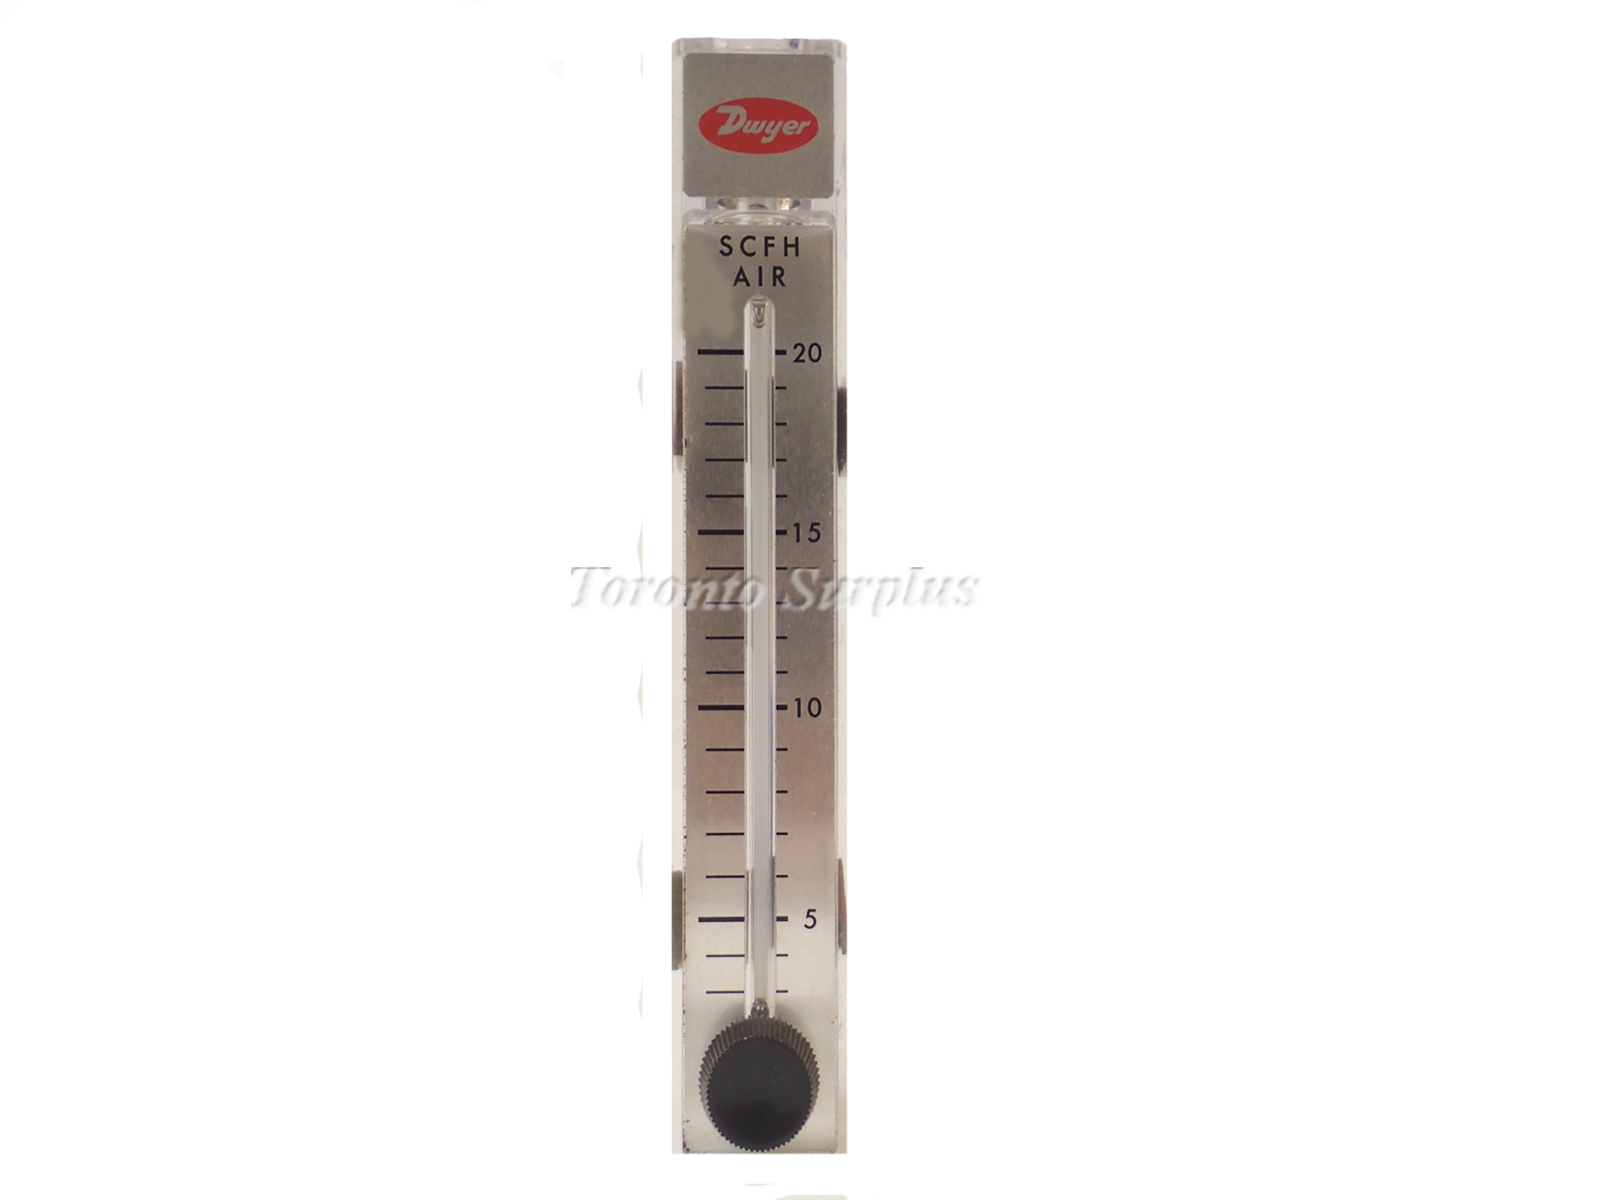 Dwyer® Flowmeter, 5 " Scale RMB 2-20 SCFH Air